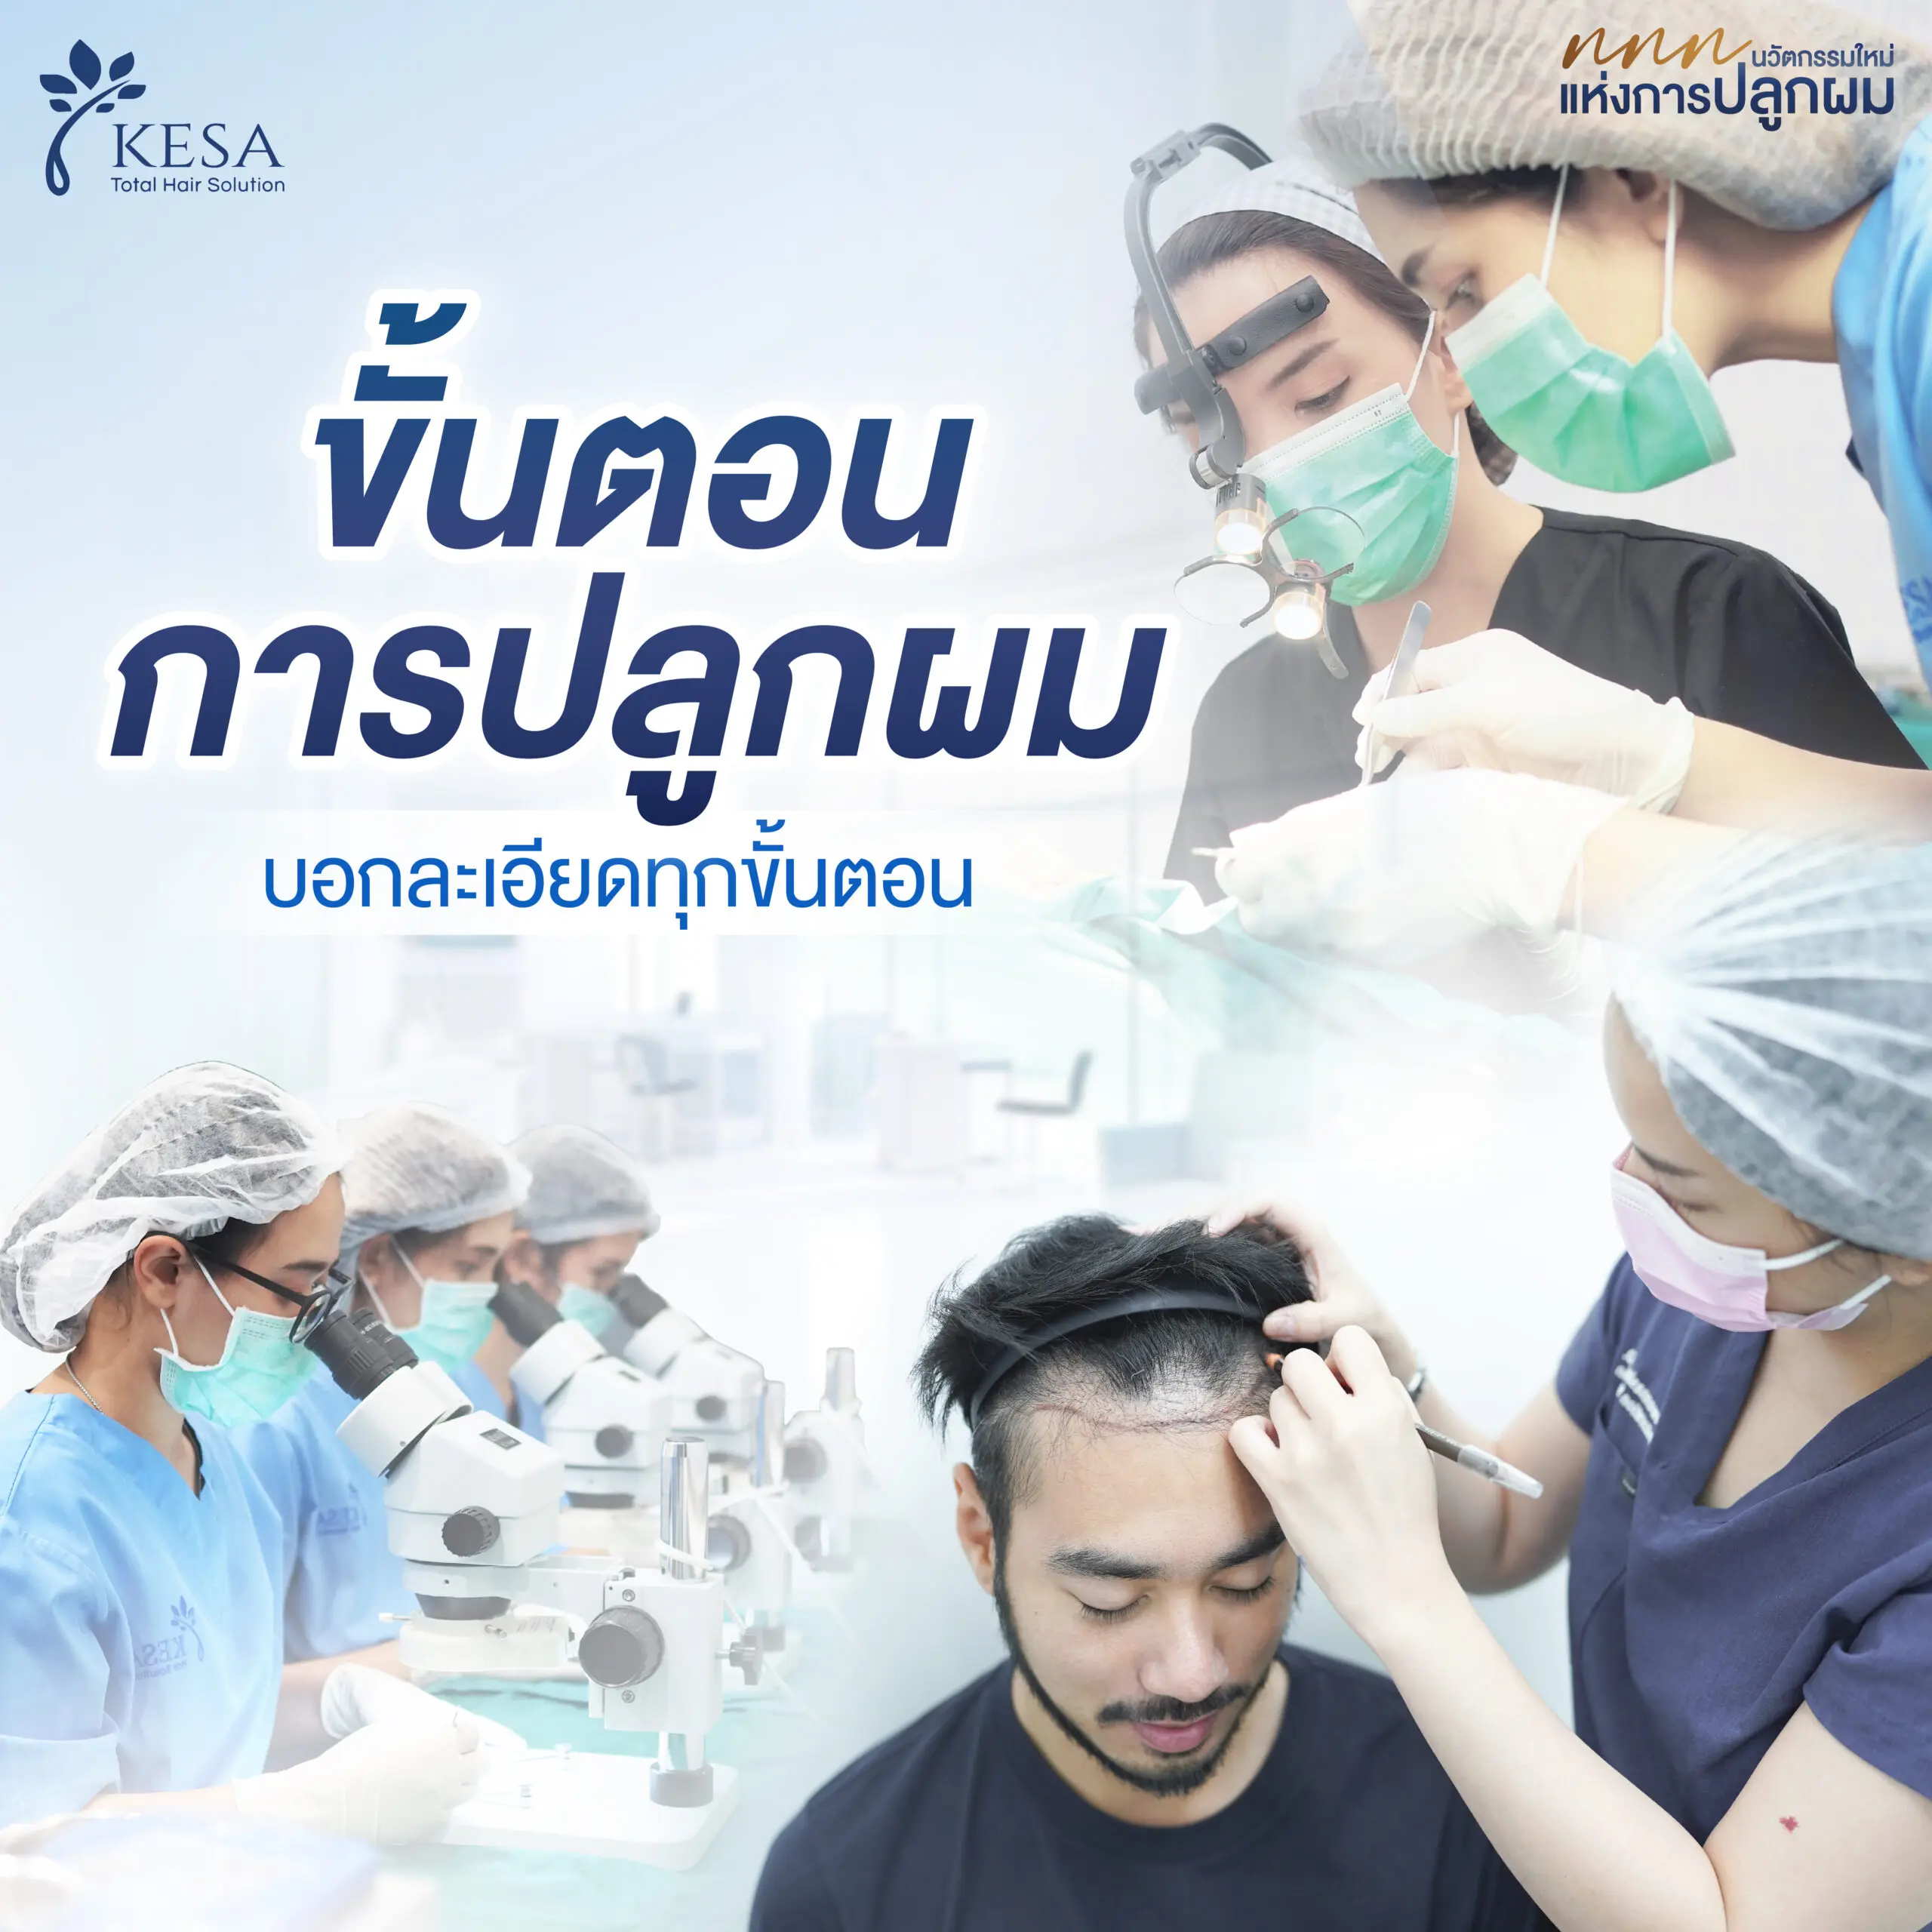 6 Steps of Hair Transplantation in Thailand